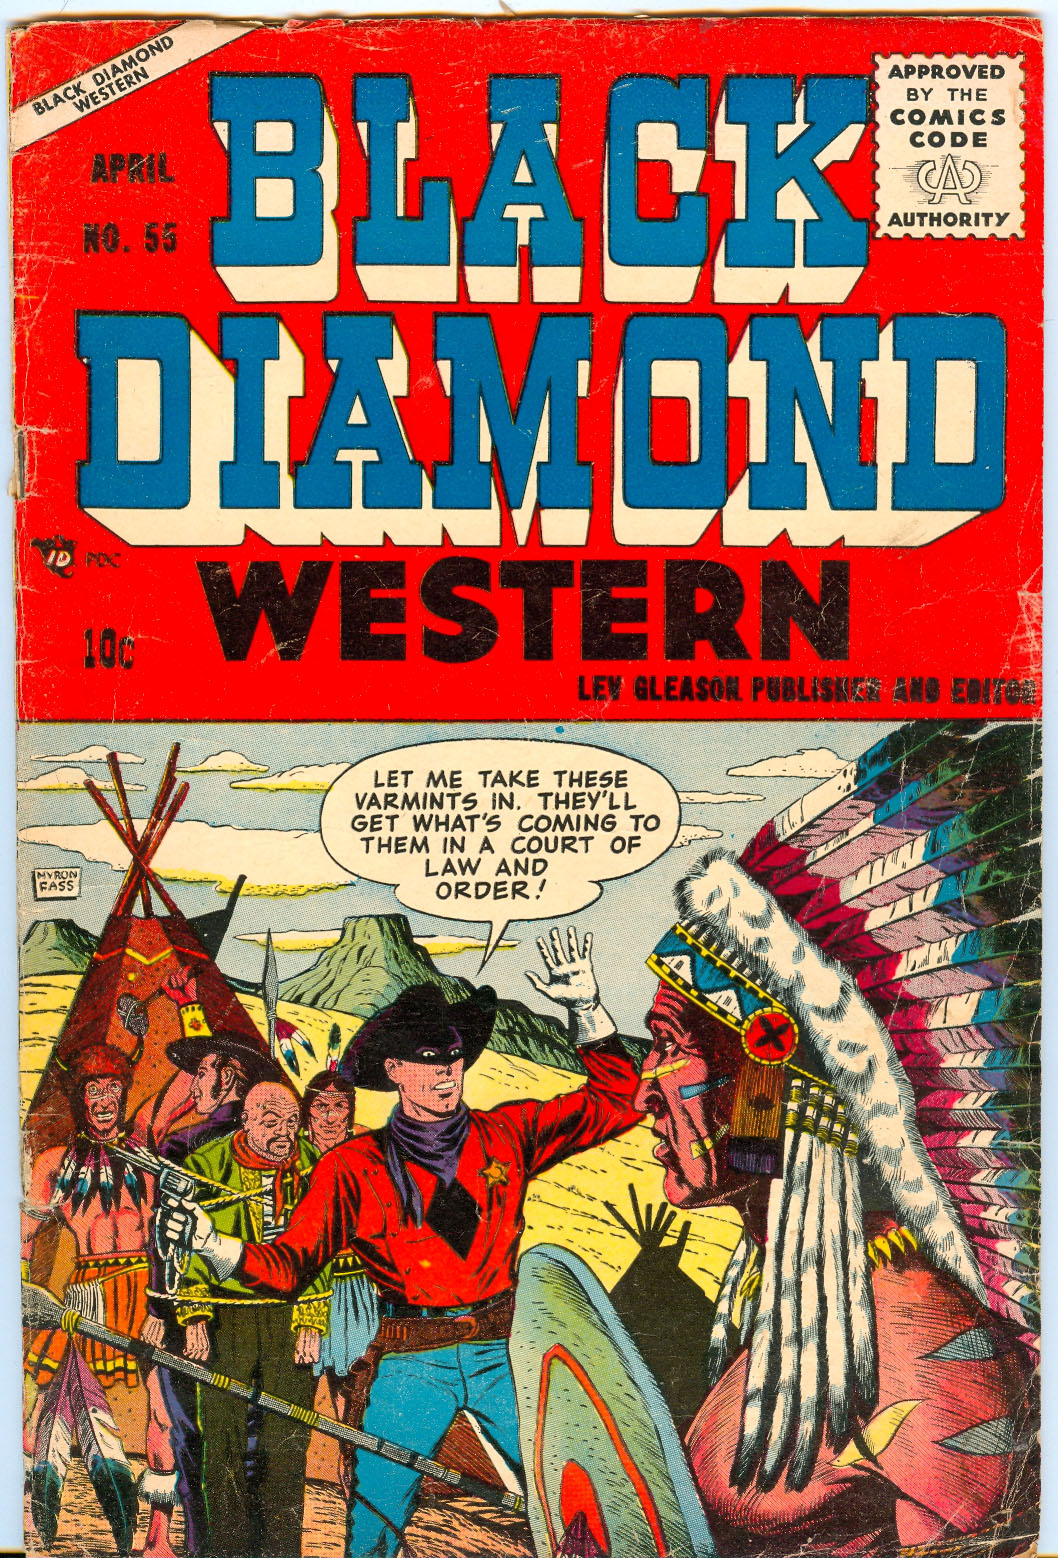 Black Diamond Western issue 55 - Page 1